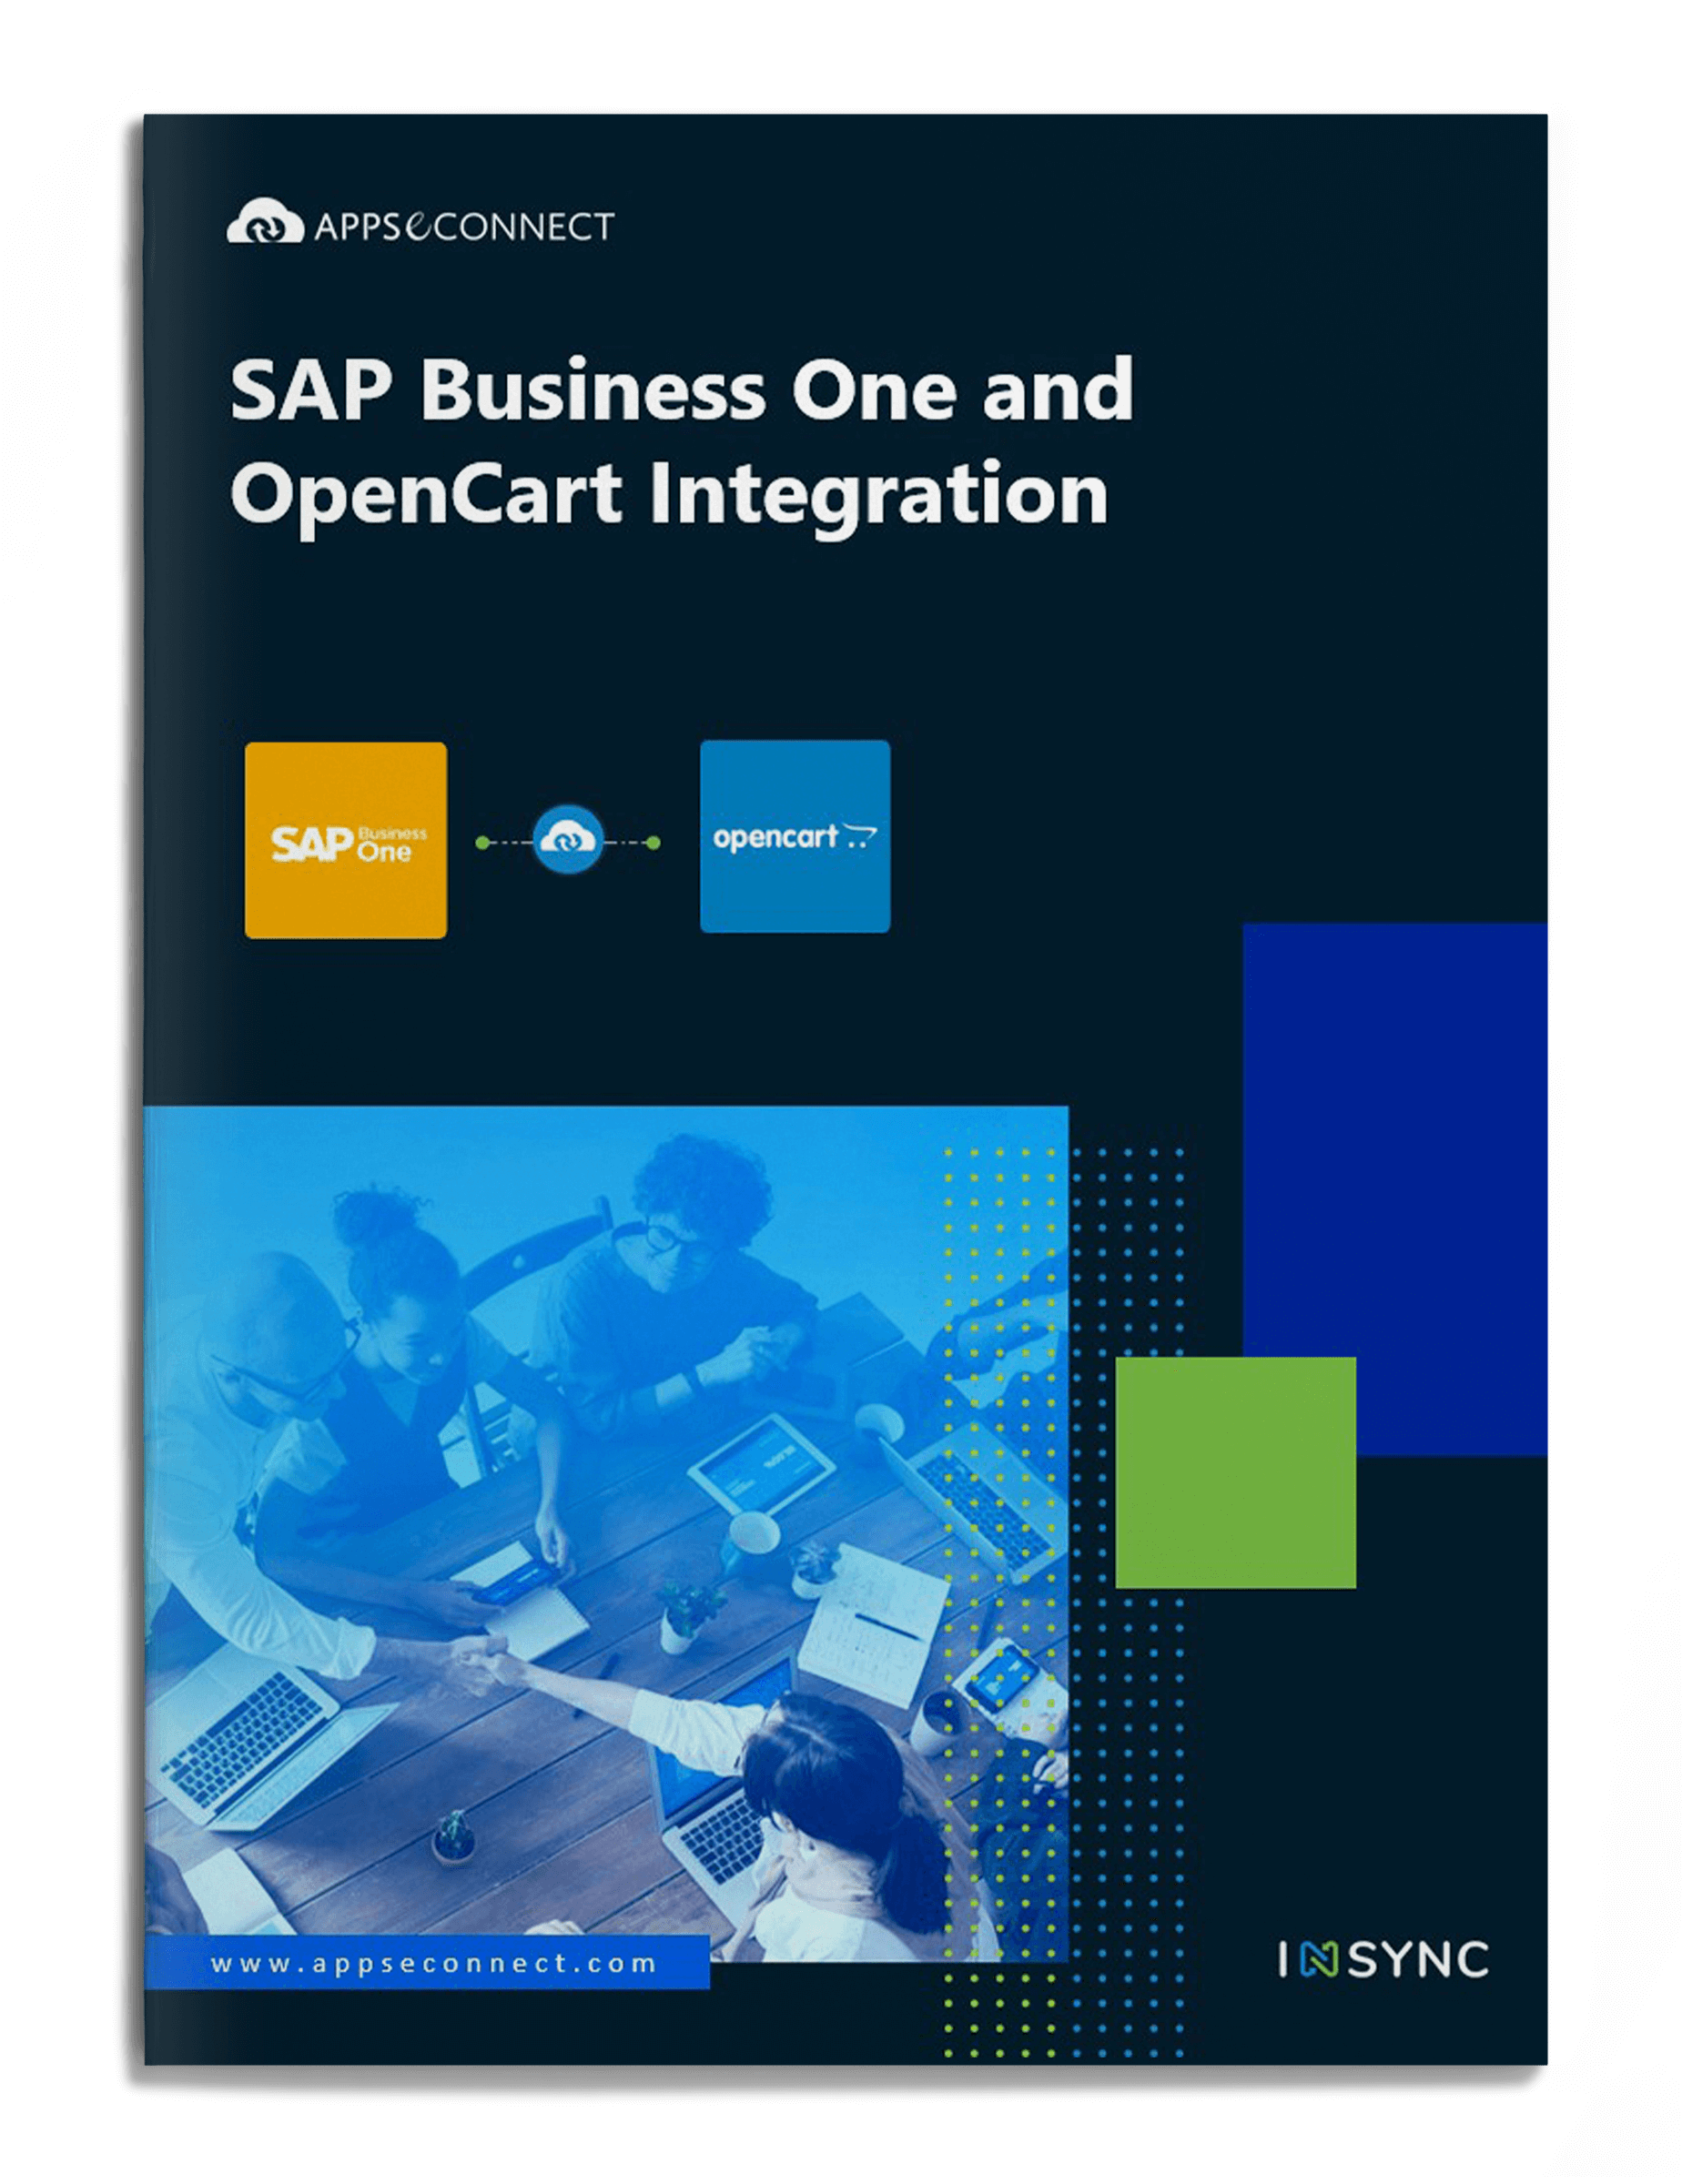 sap-business-one-opencart-integration-brochure-cover